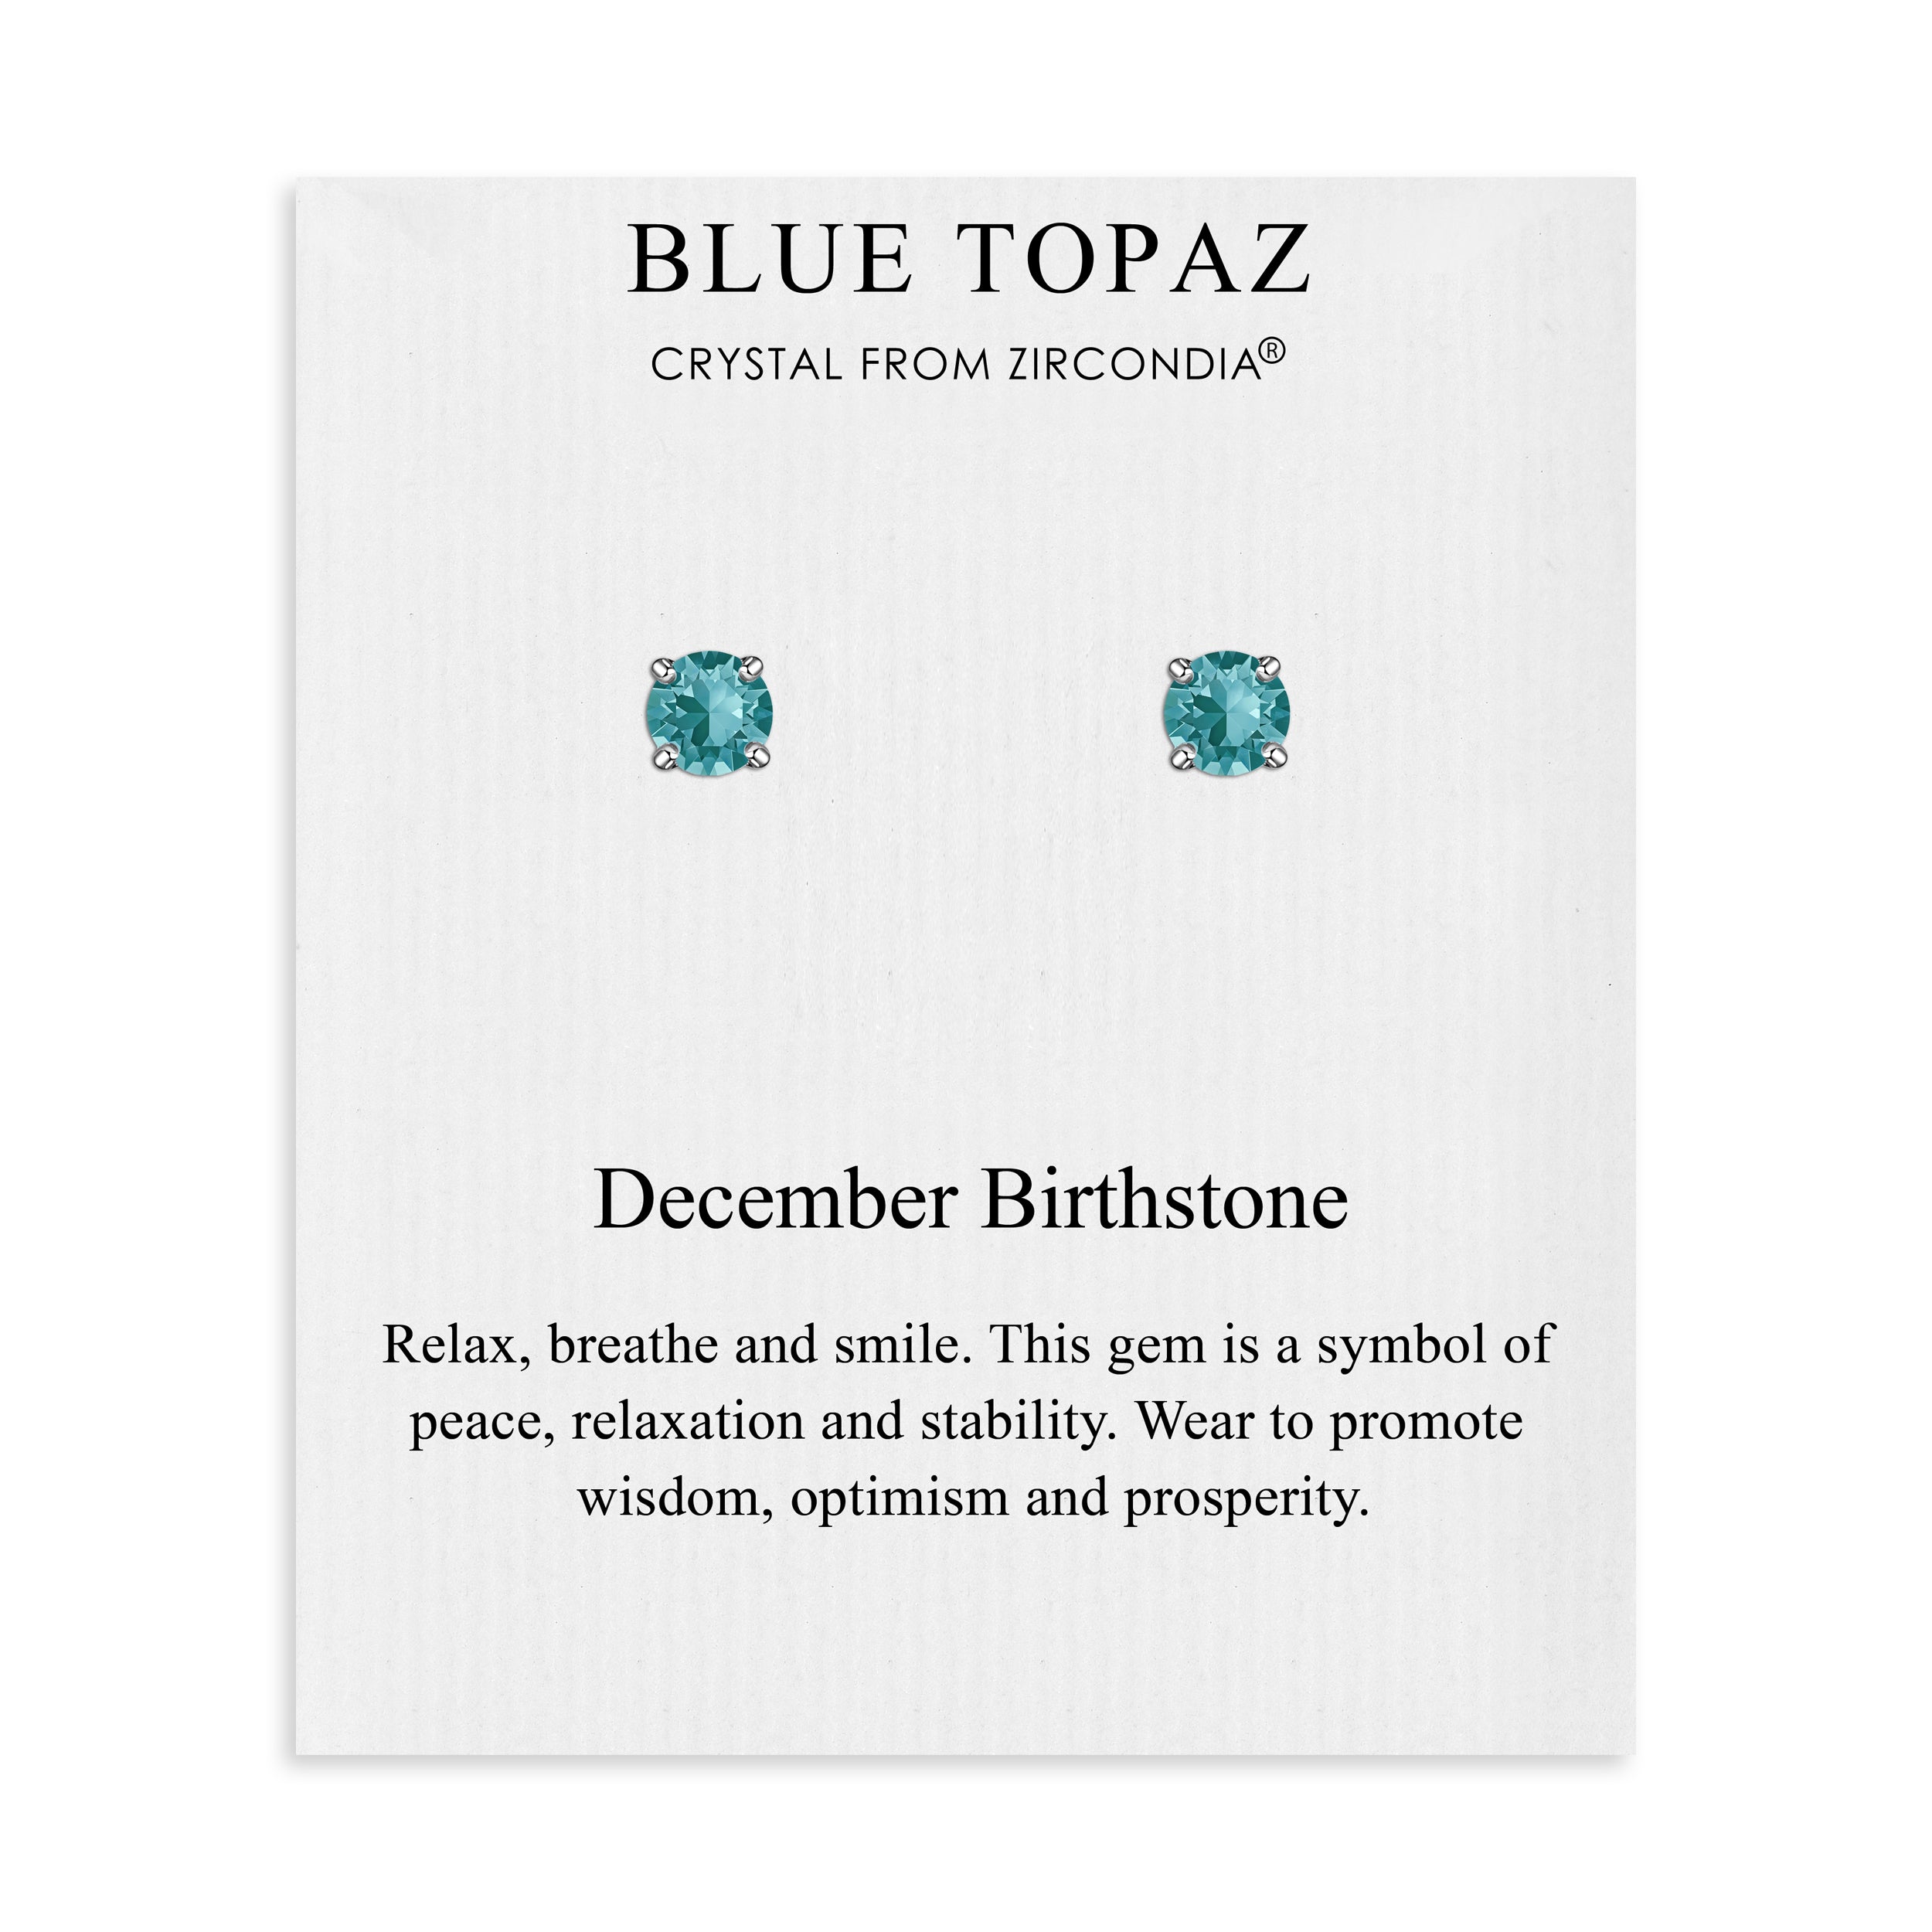 December (Blue Topaz) Birthstone Earrings Created with Zircondia® Crystals by Philip Jones Jewellery